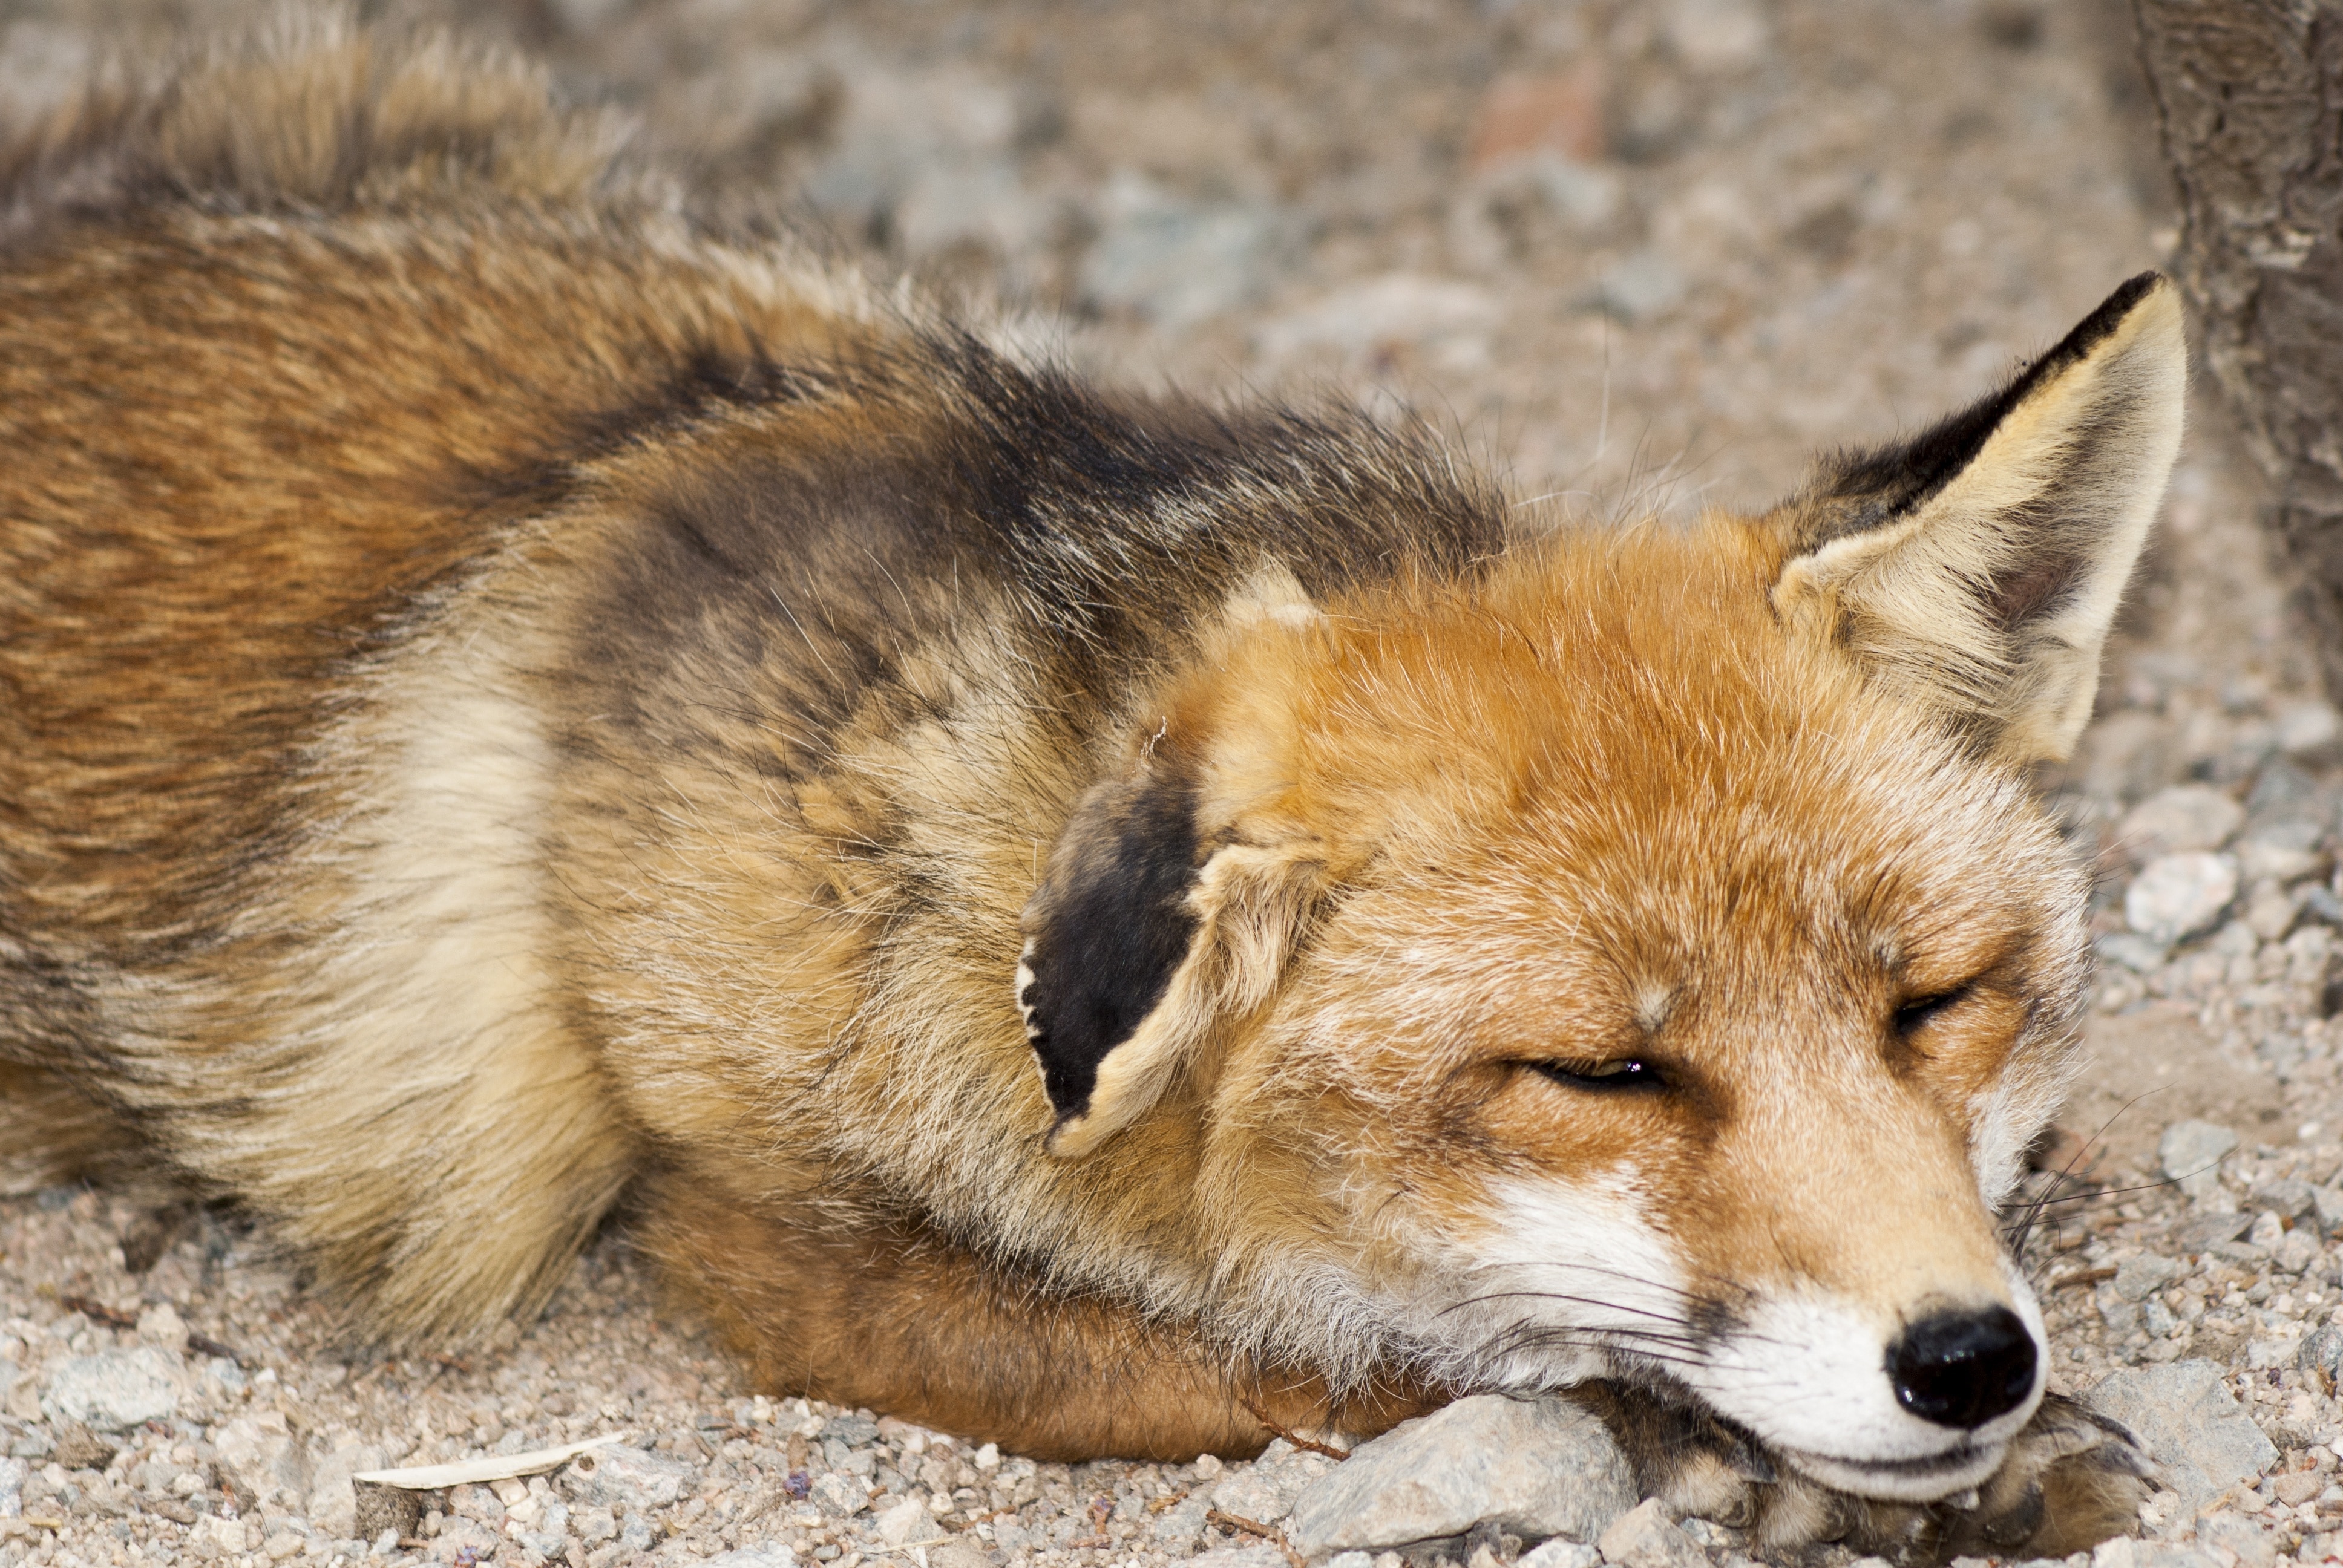 Mammal, Animal, Asleep, Nature, Fox, animal wildlife, one animal